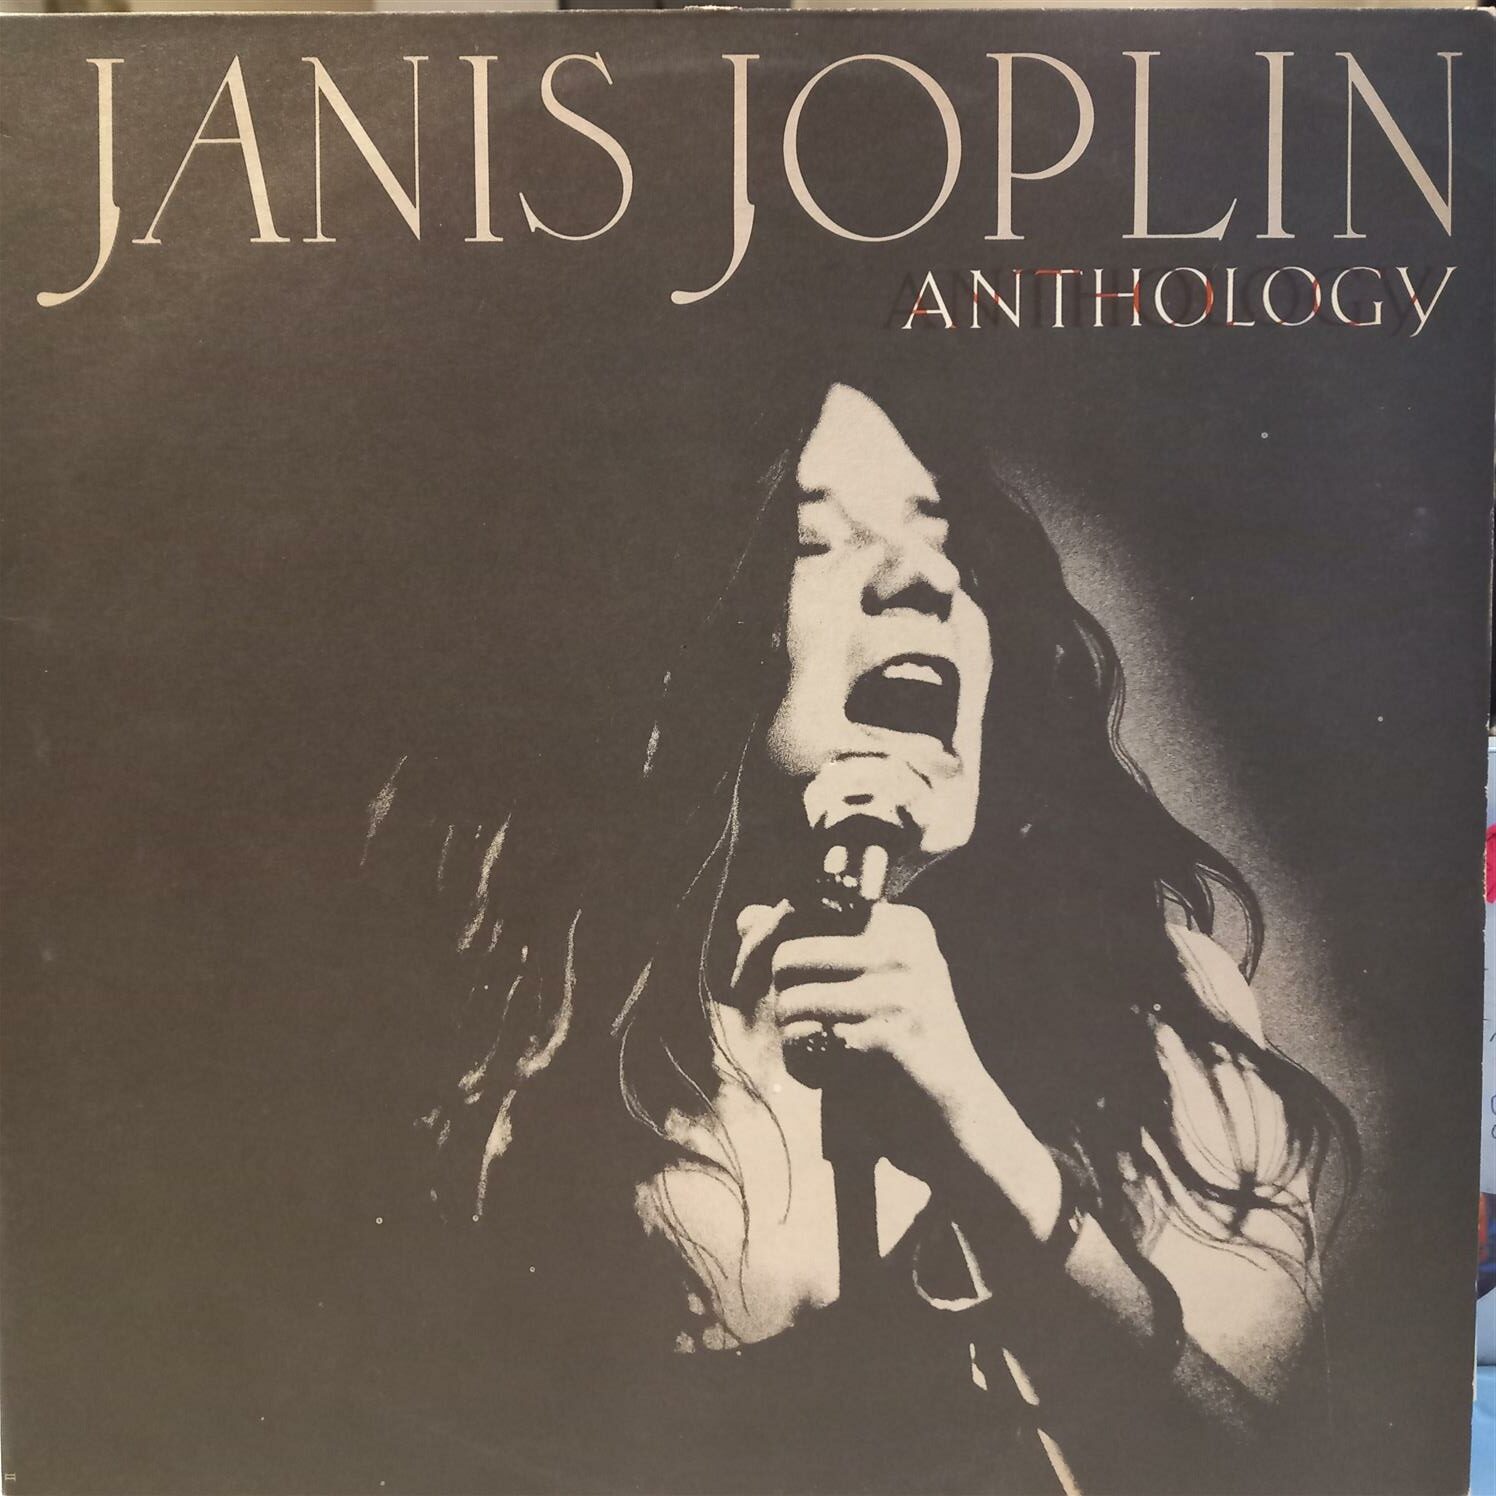 JANIS JOPLIN – ANTHOLOGY ON